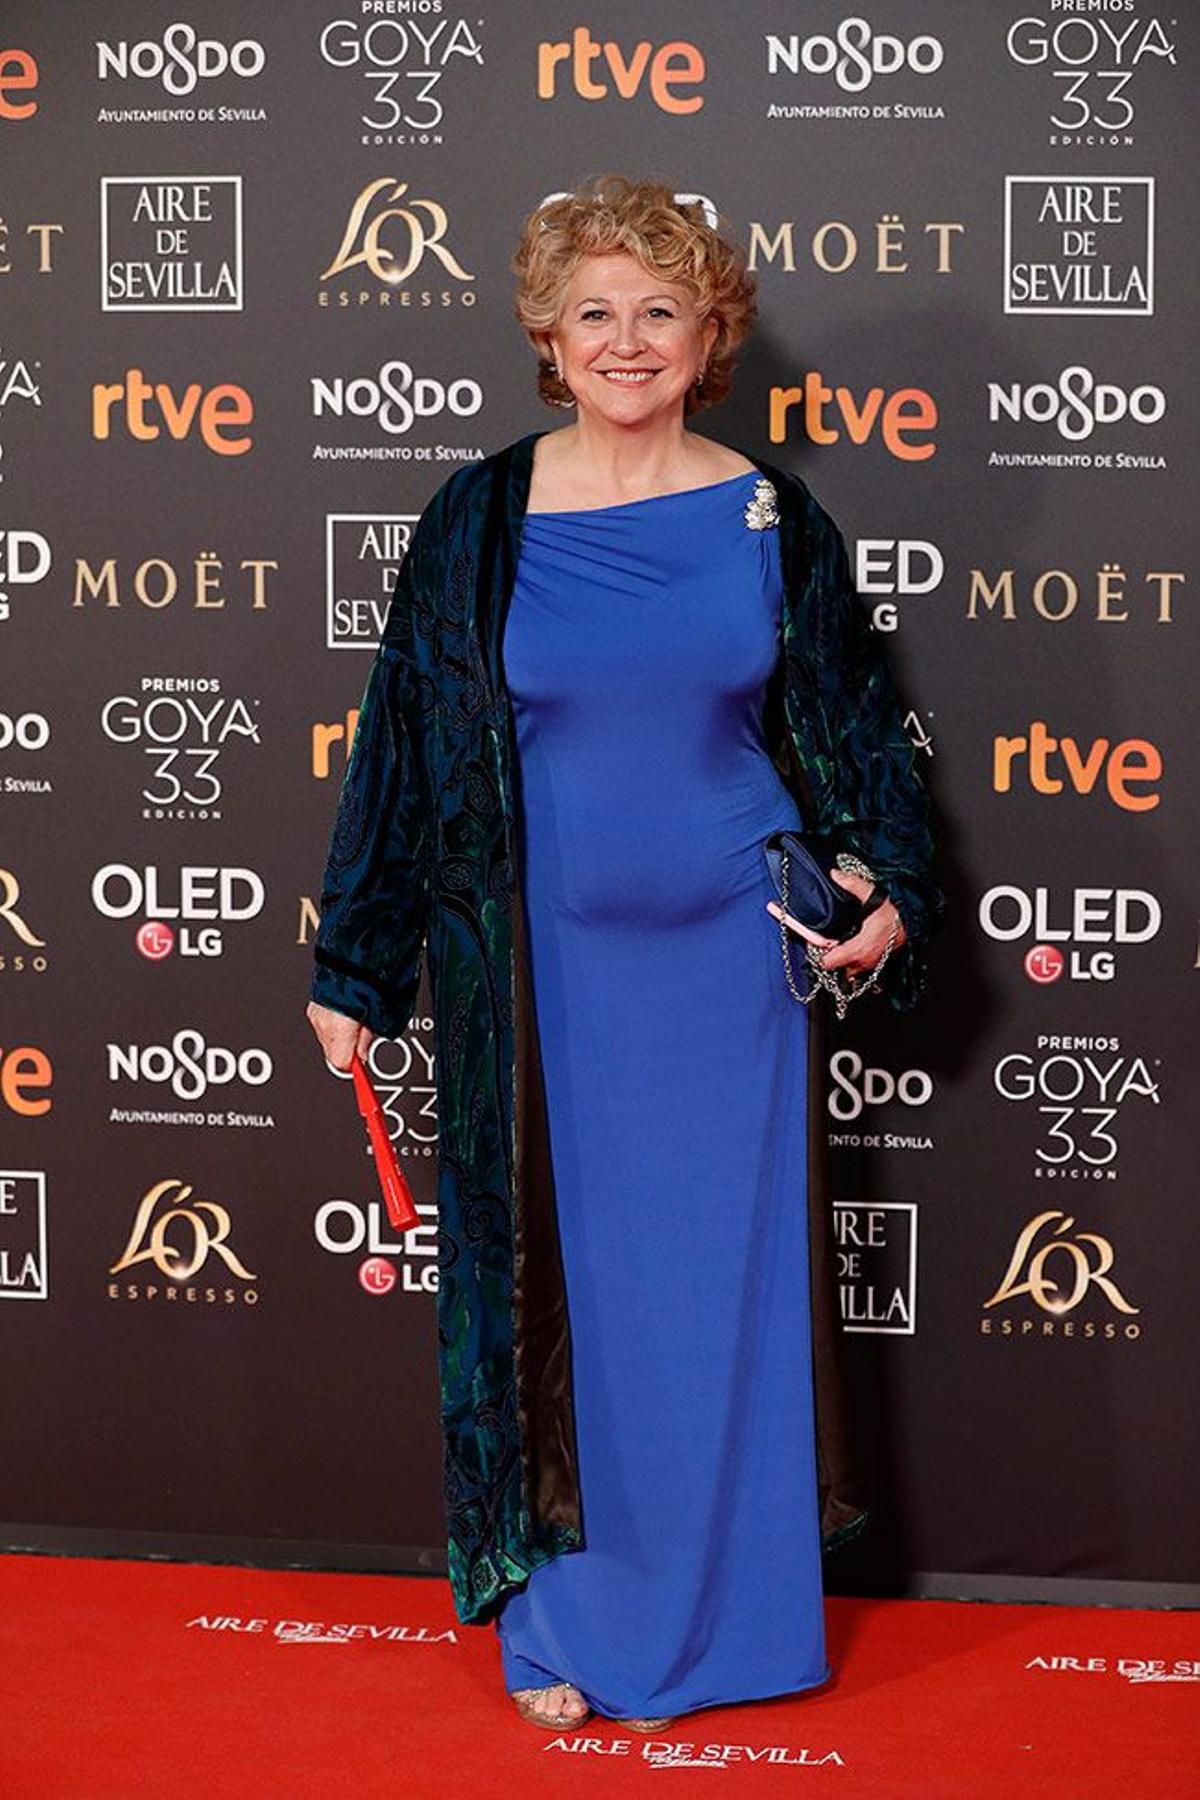 Premios Goya 2019, Esther García